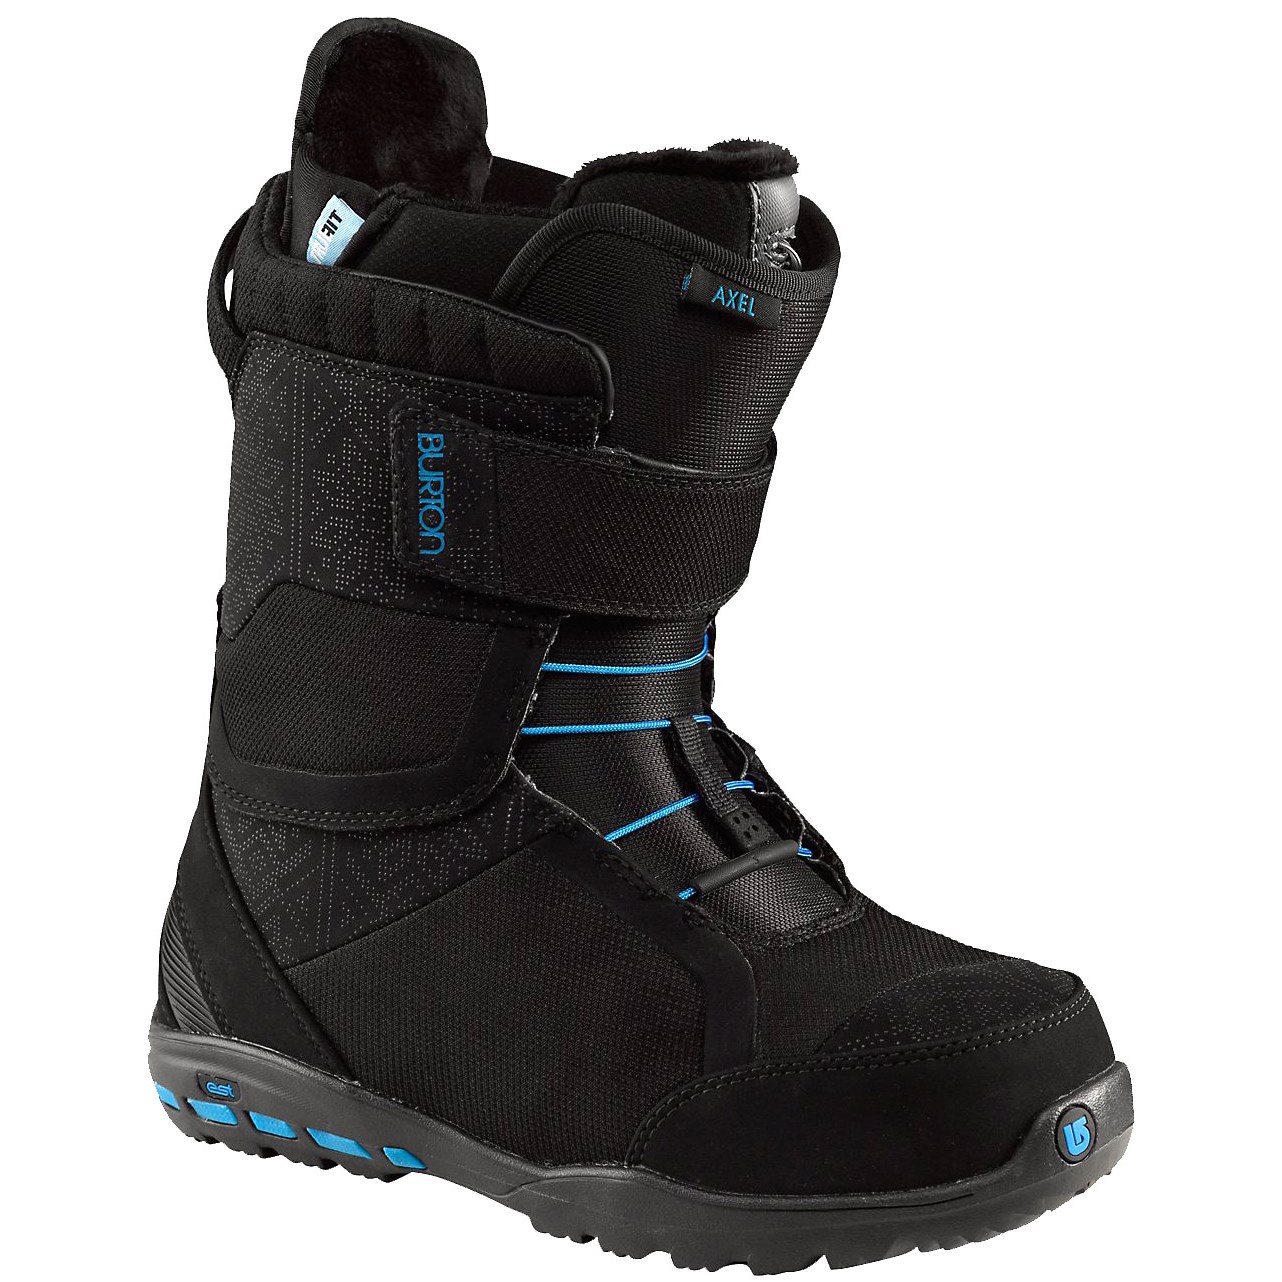 Burton Snowboard Boots - Women's |